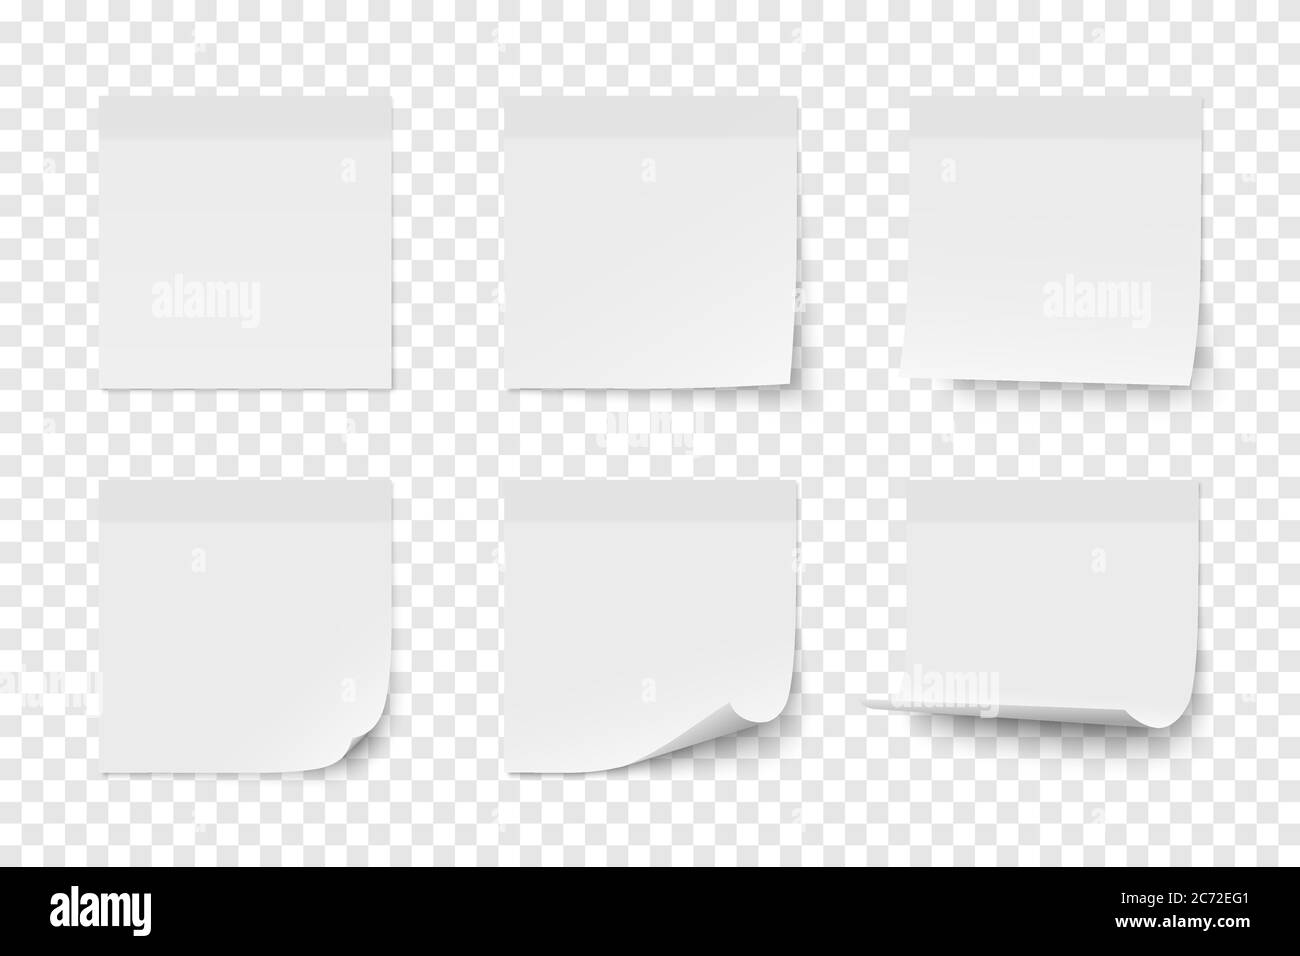 Sticky Note Alphabet stock photo. Image of white, sticker - 27451558